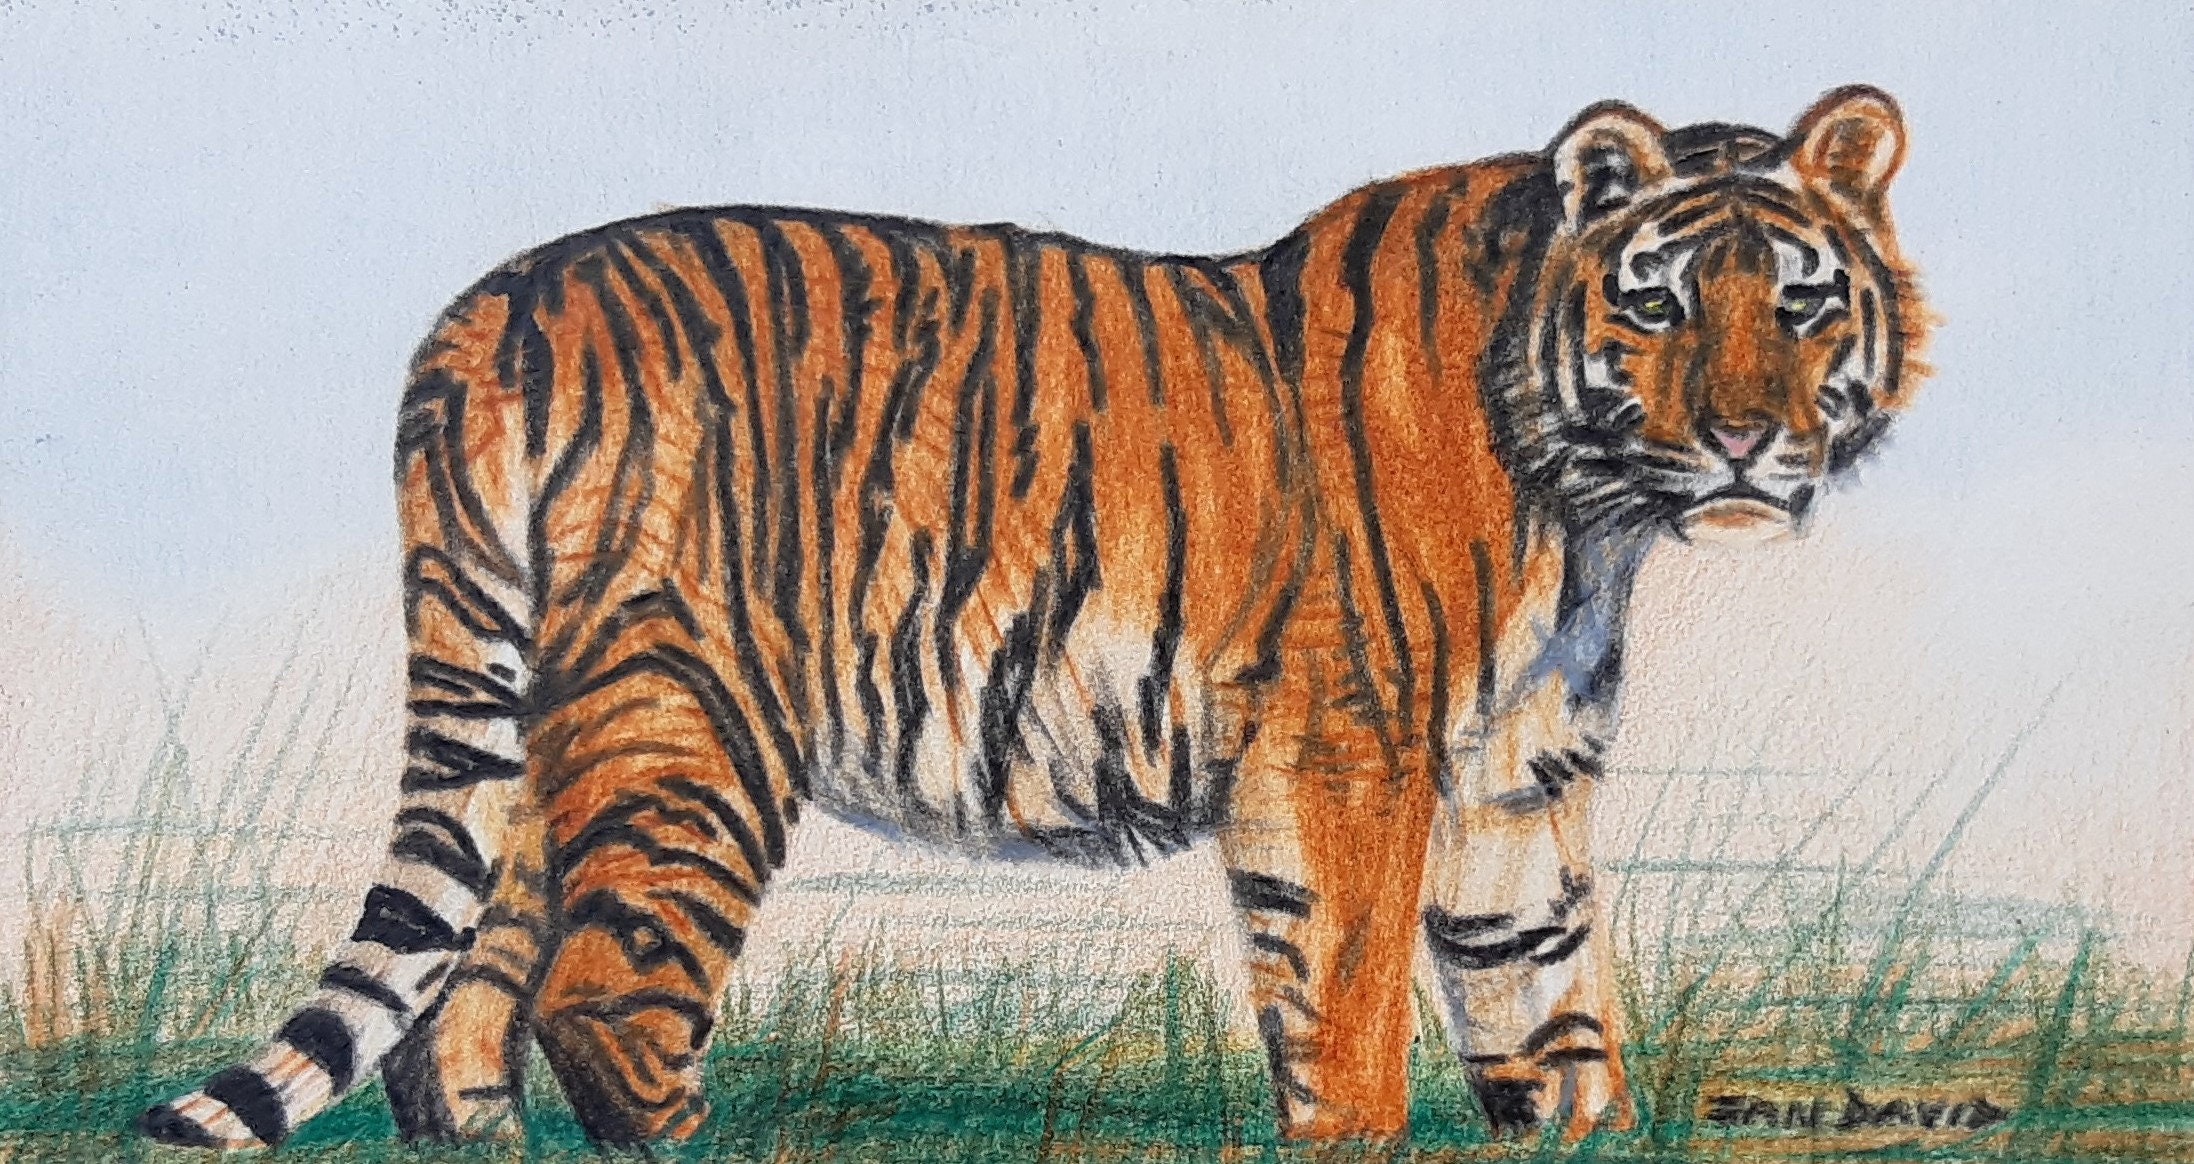 RUBI ART - Royal Bengal Tiger.... Oil painting.... | Facebook